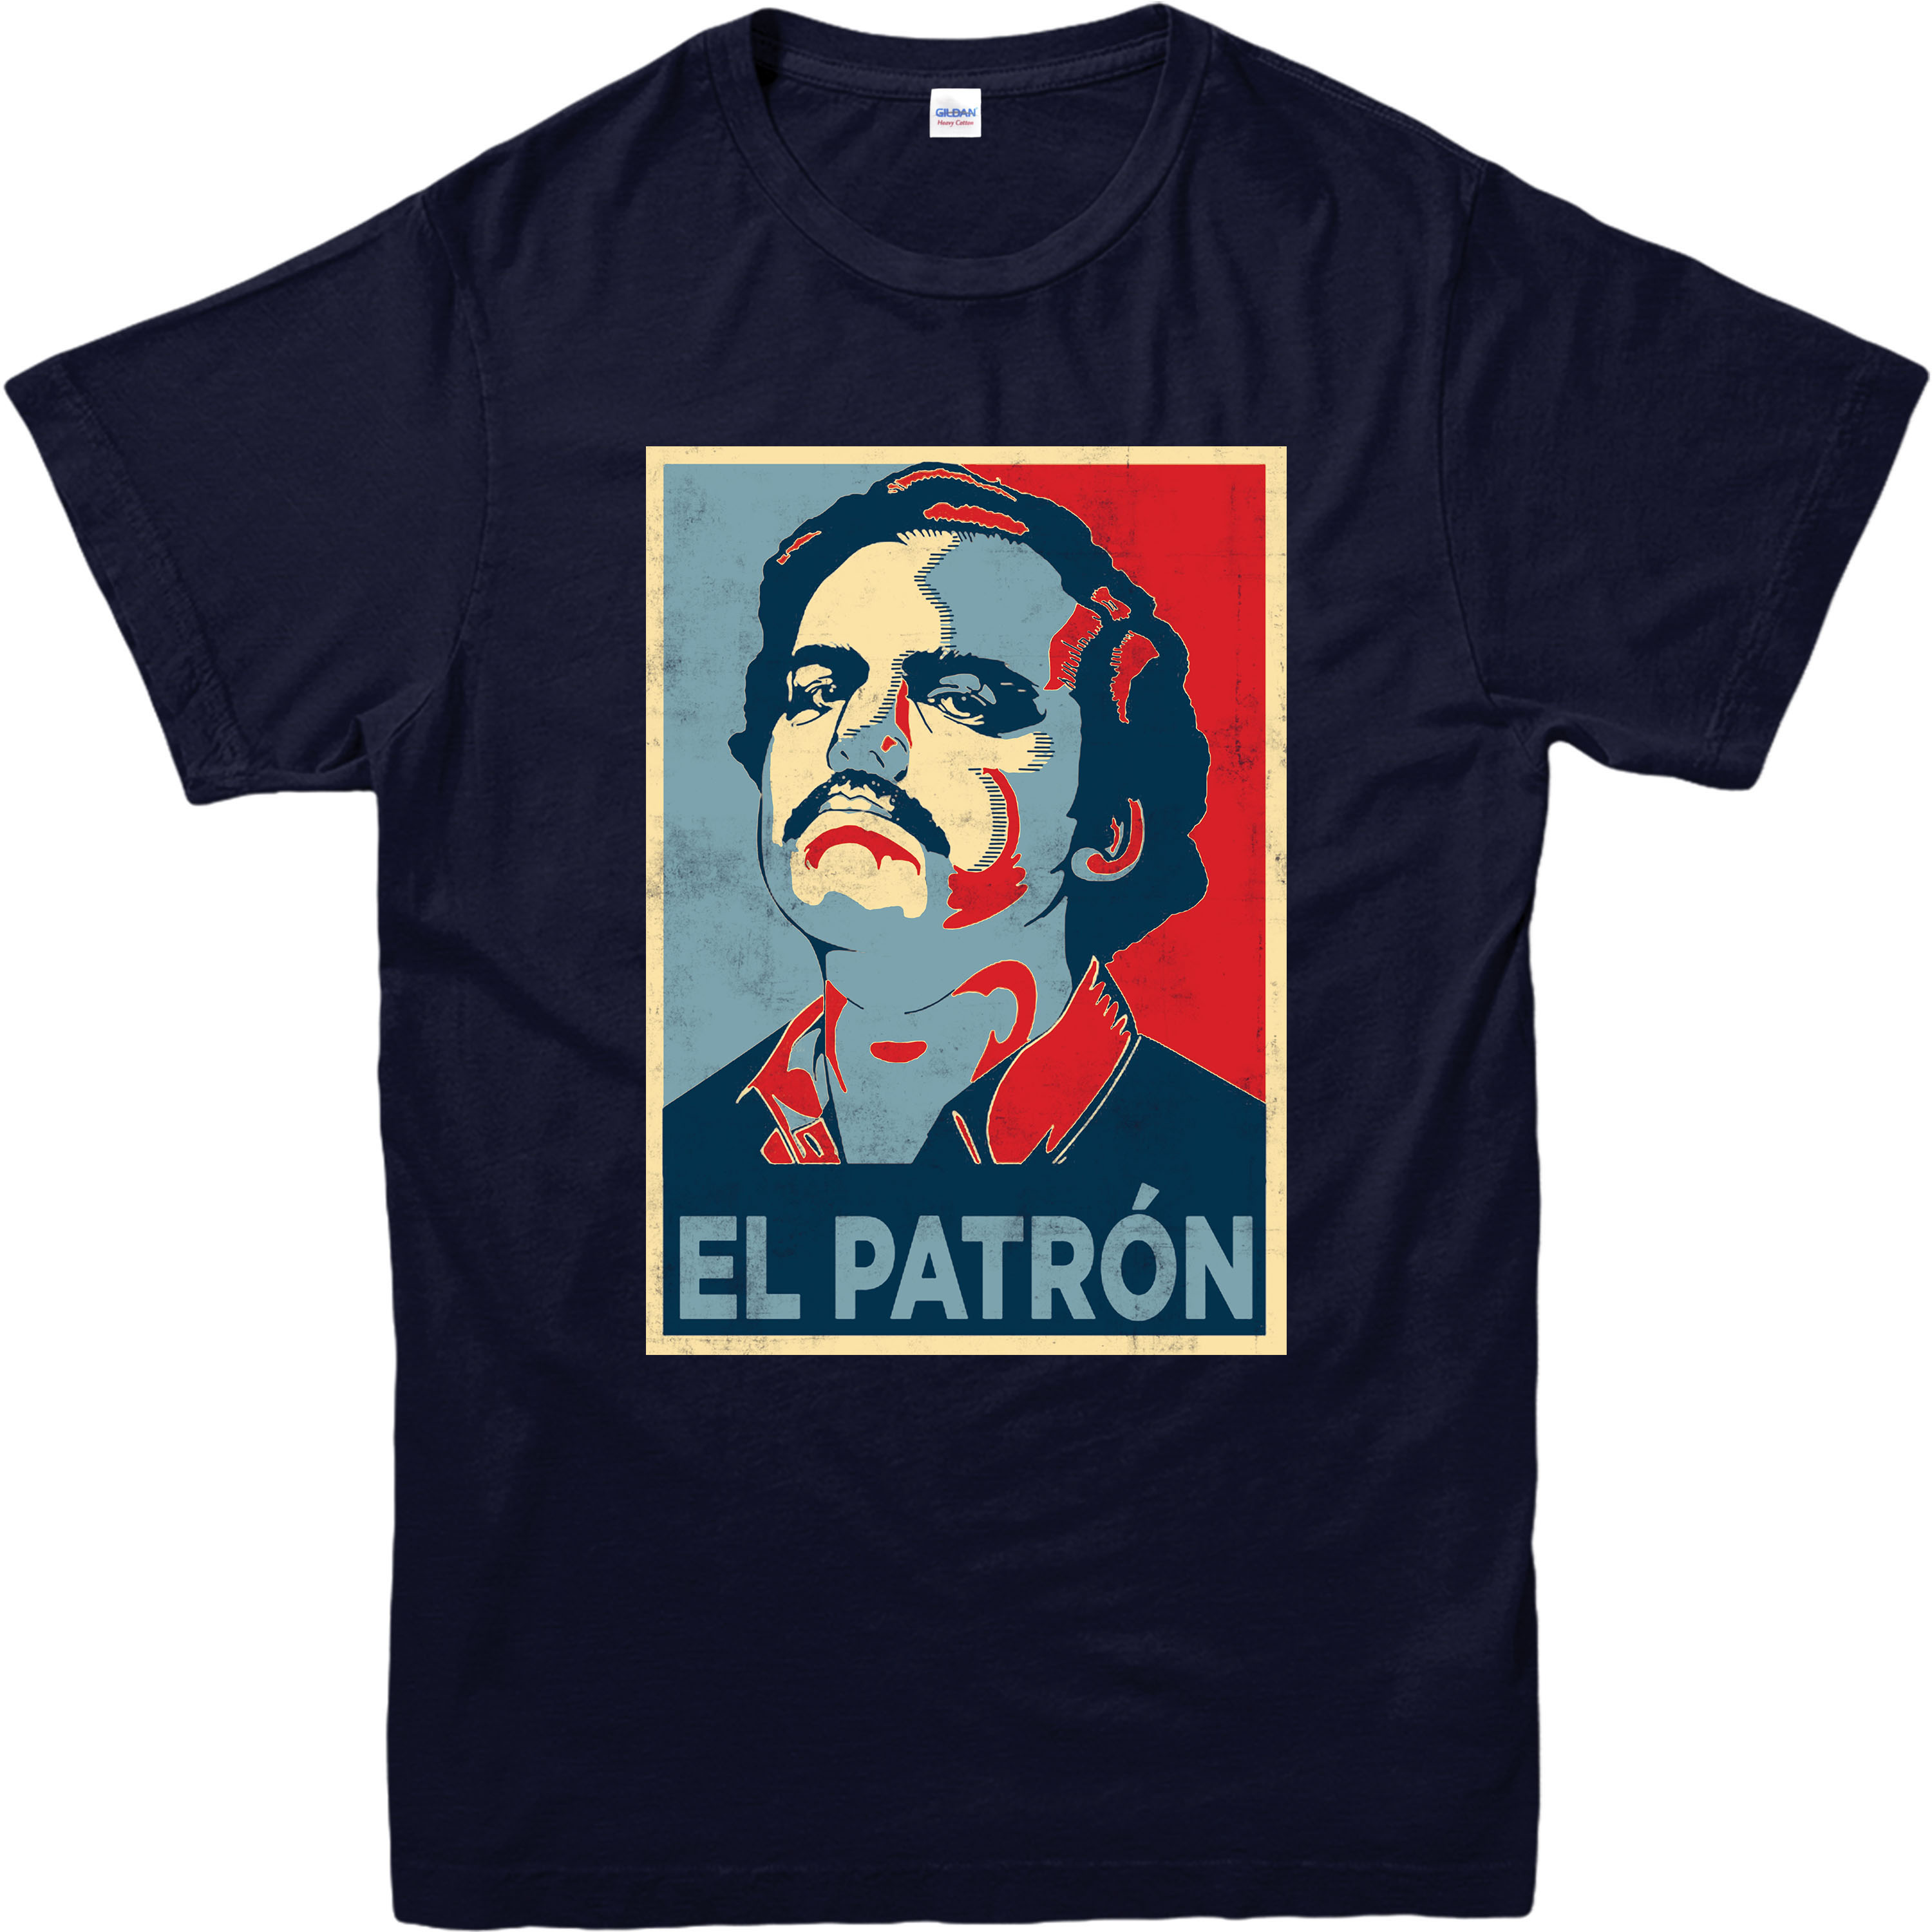 Pablo Escobar T-Shirt,El Patron Drug lord,Adult and kids Sizes | eBay